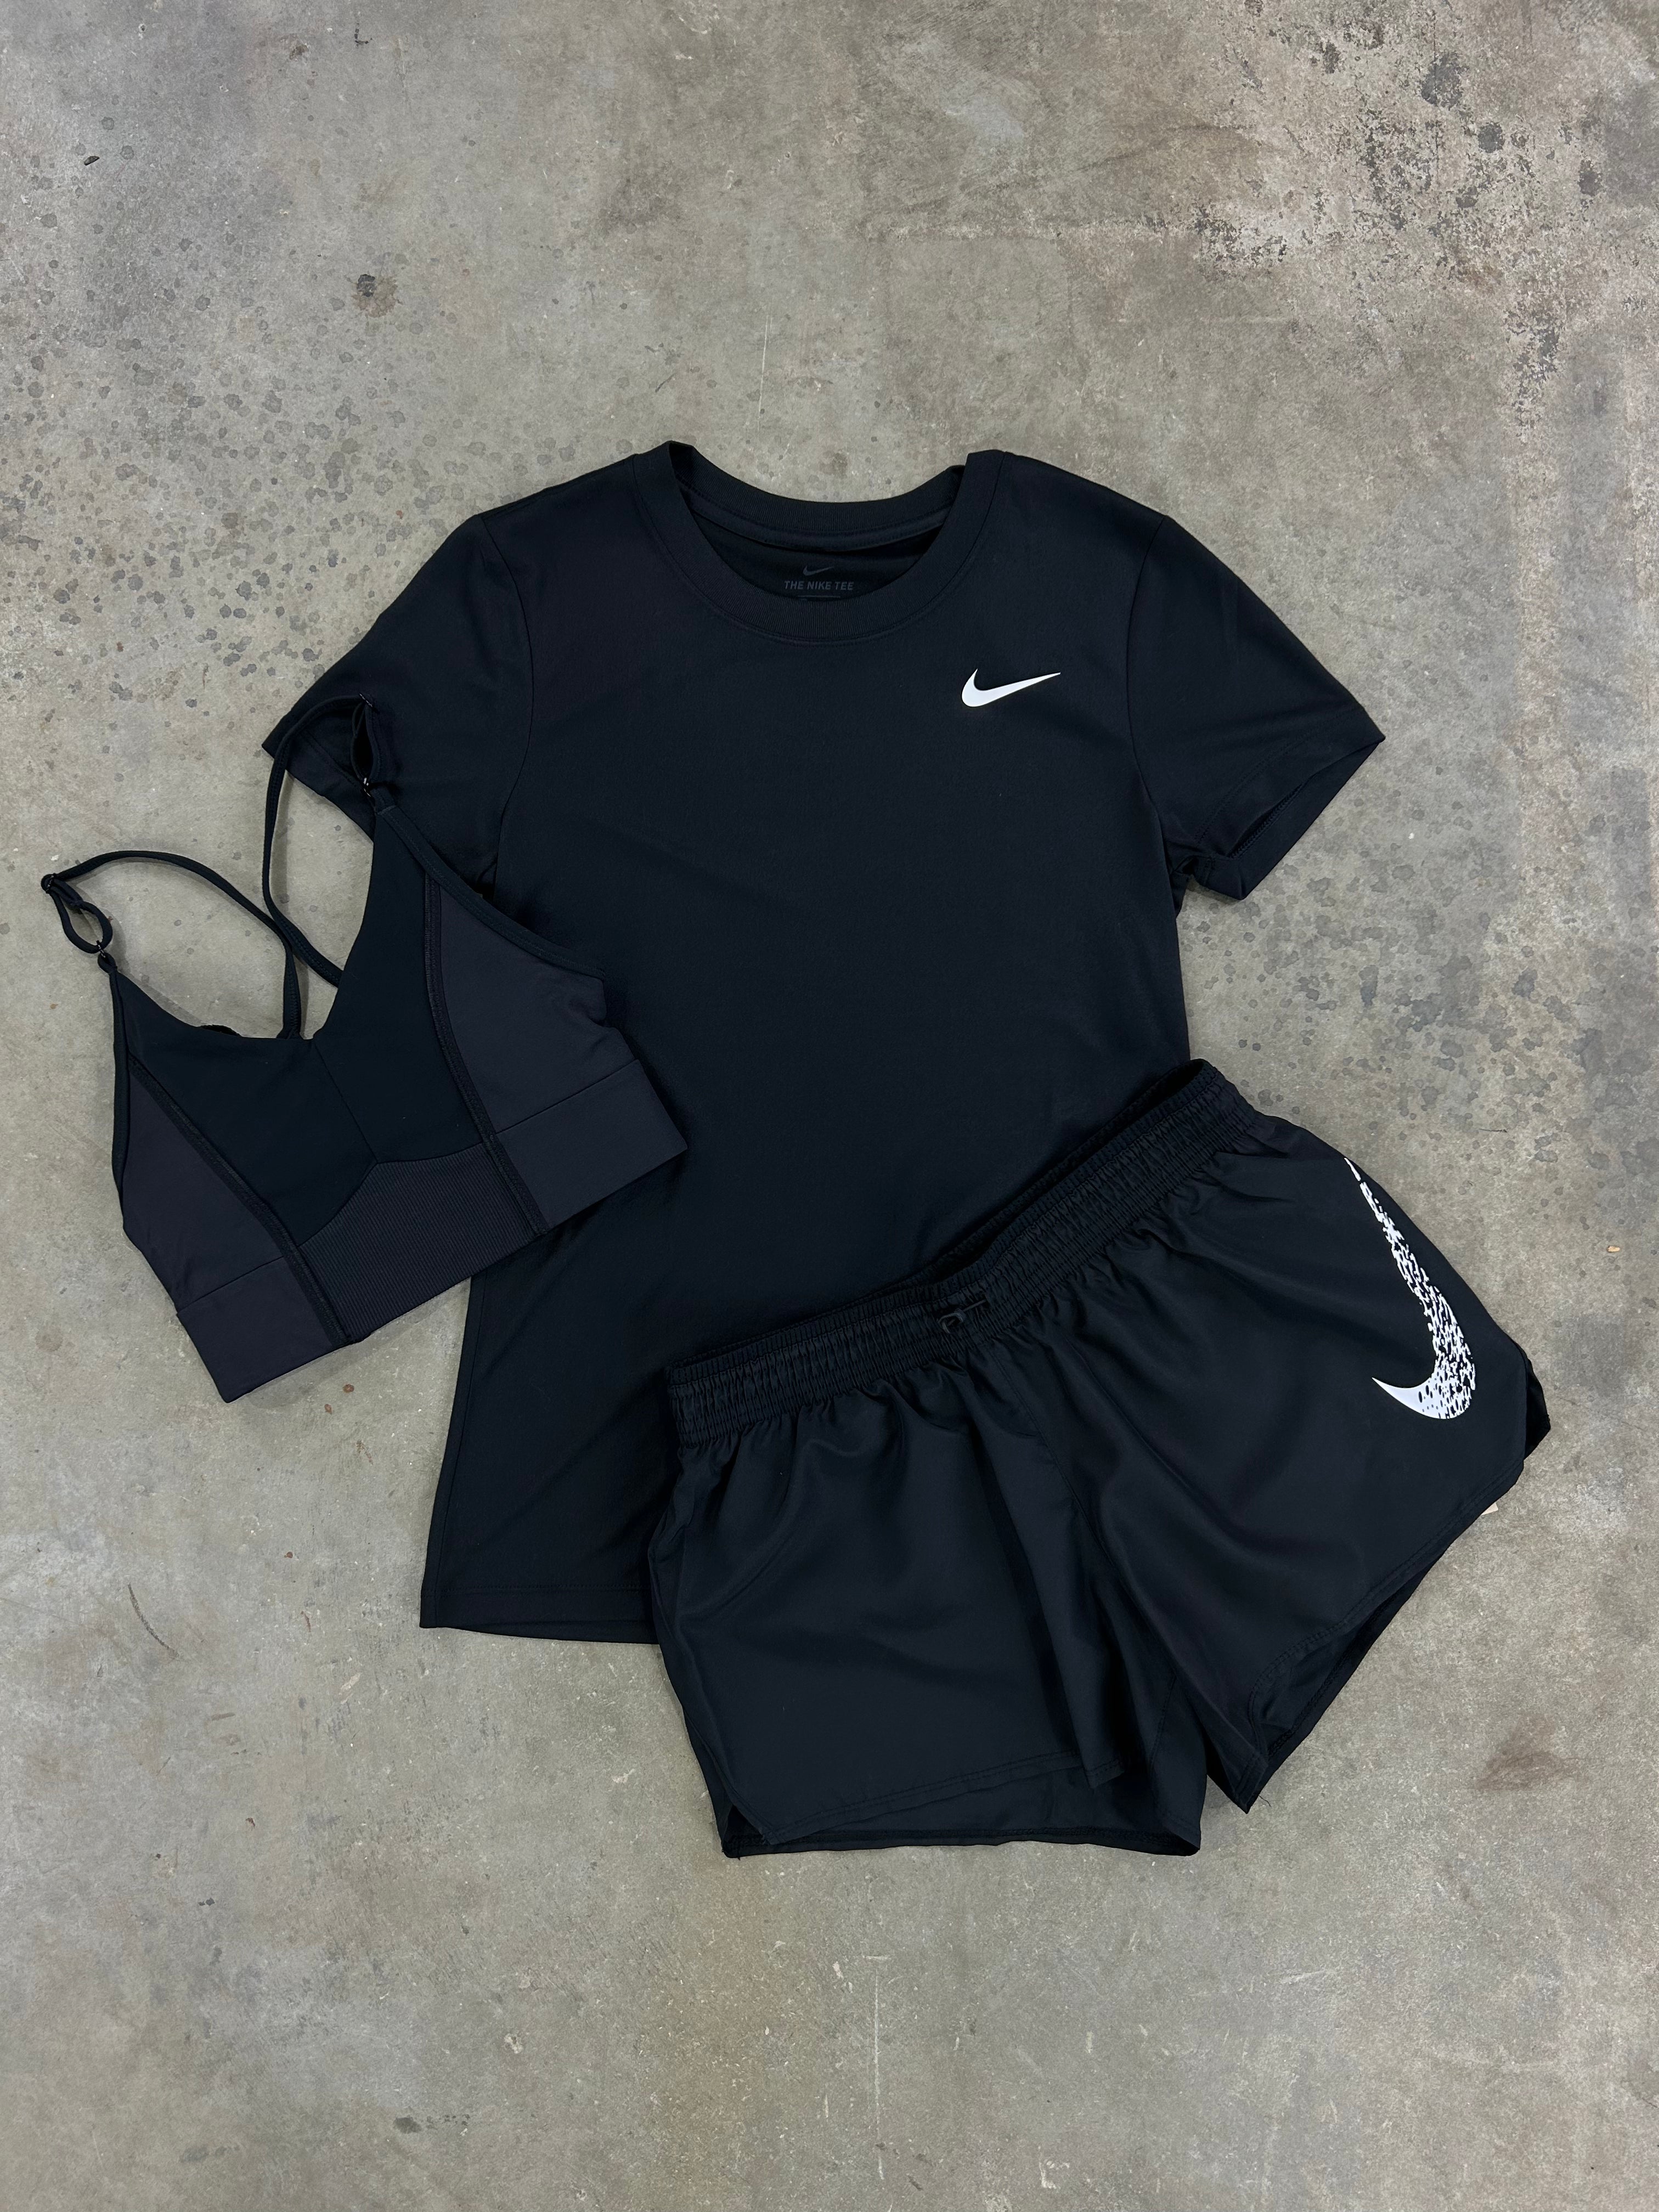 Nike 3 Piece Swoosh Set - Sports Bra / Top / Shorts